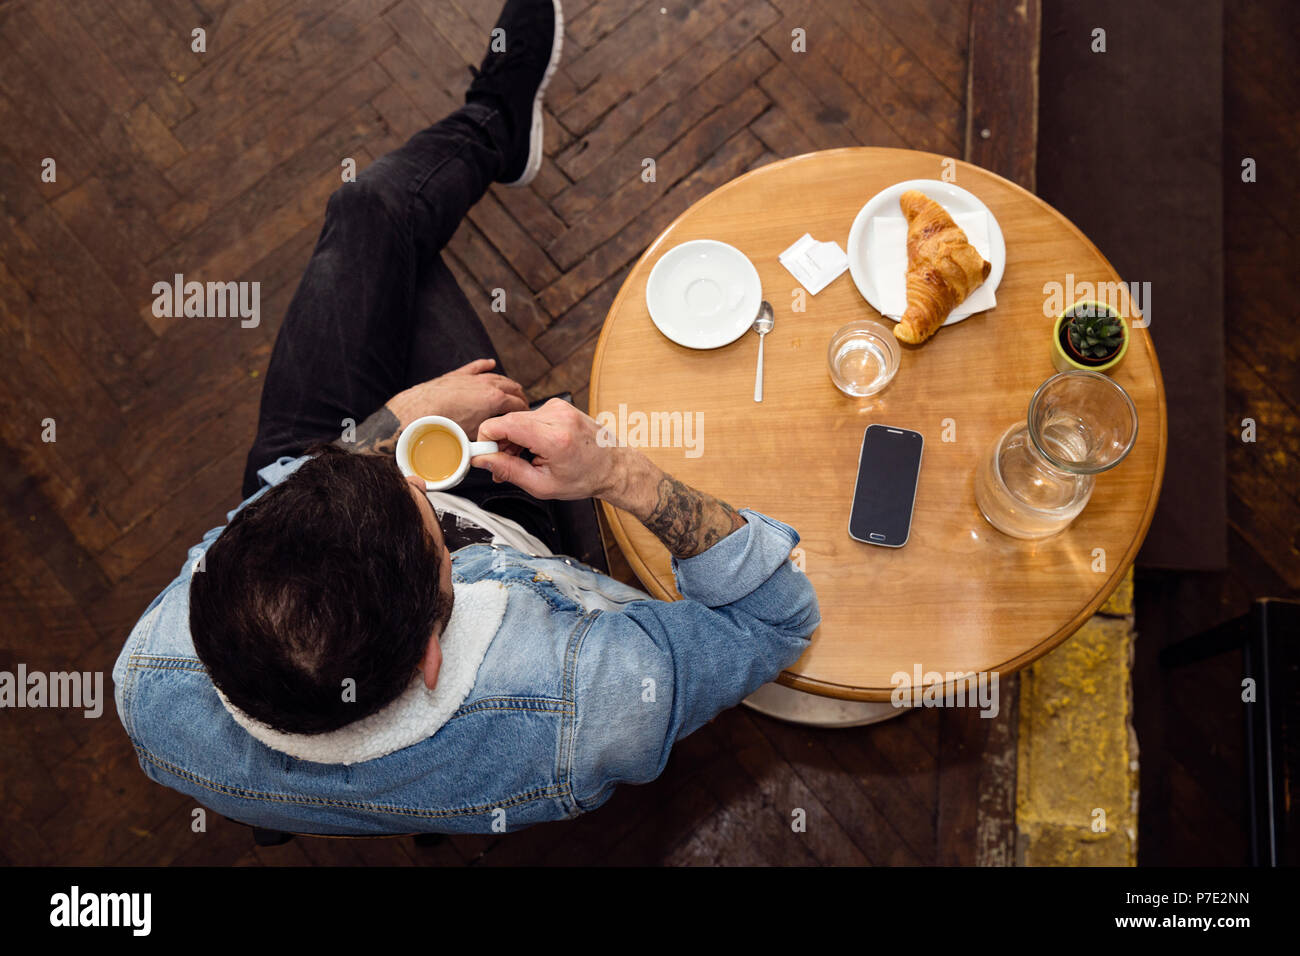 Man having coffee in cafe Stock Photo